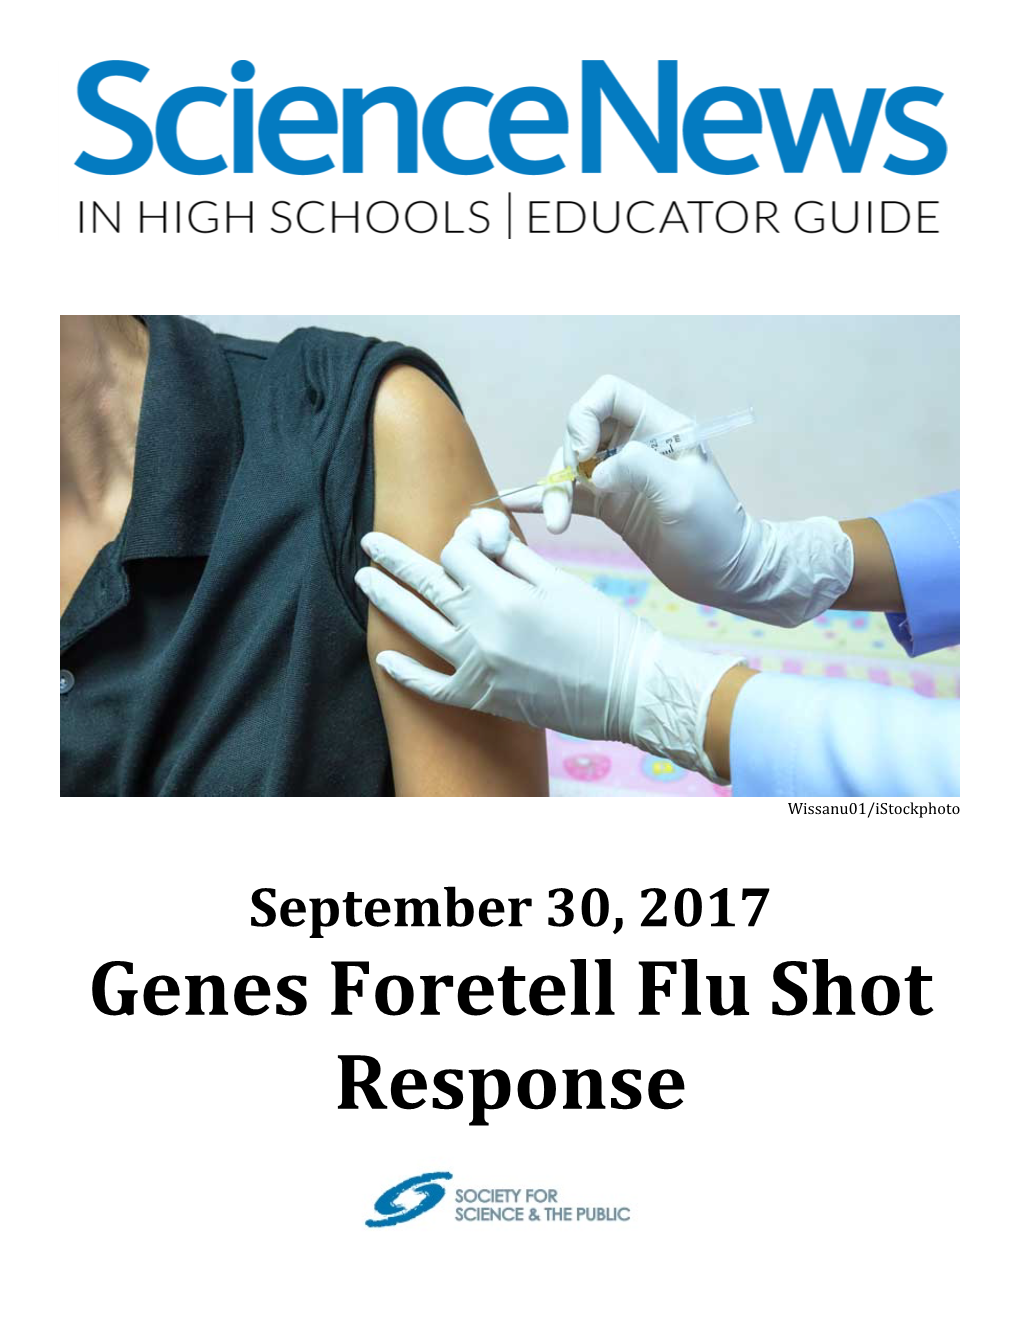 Genes Foretell Flu Shot Response